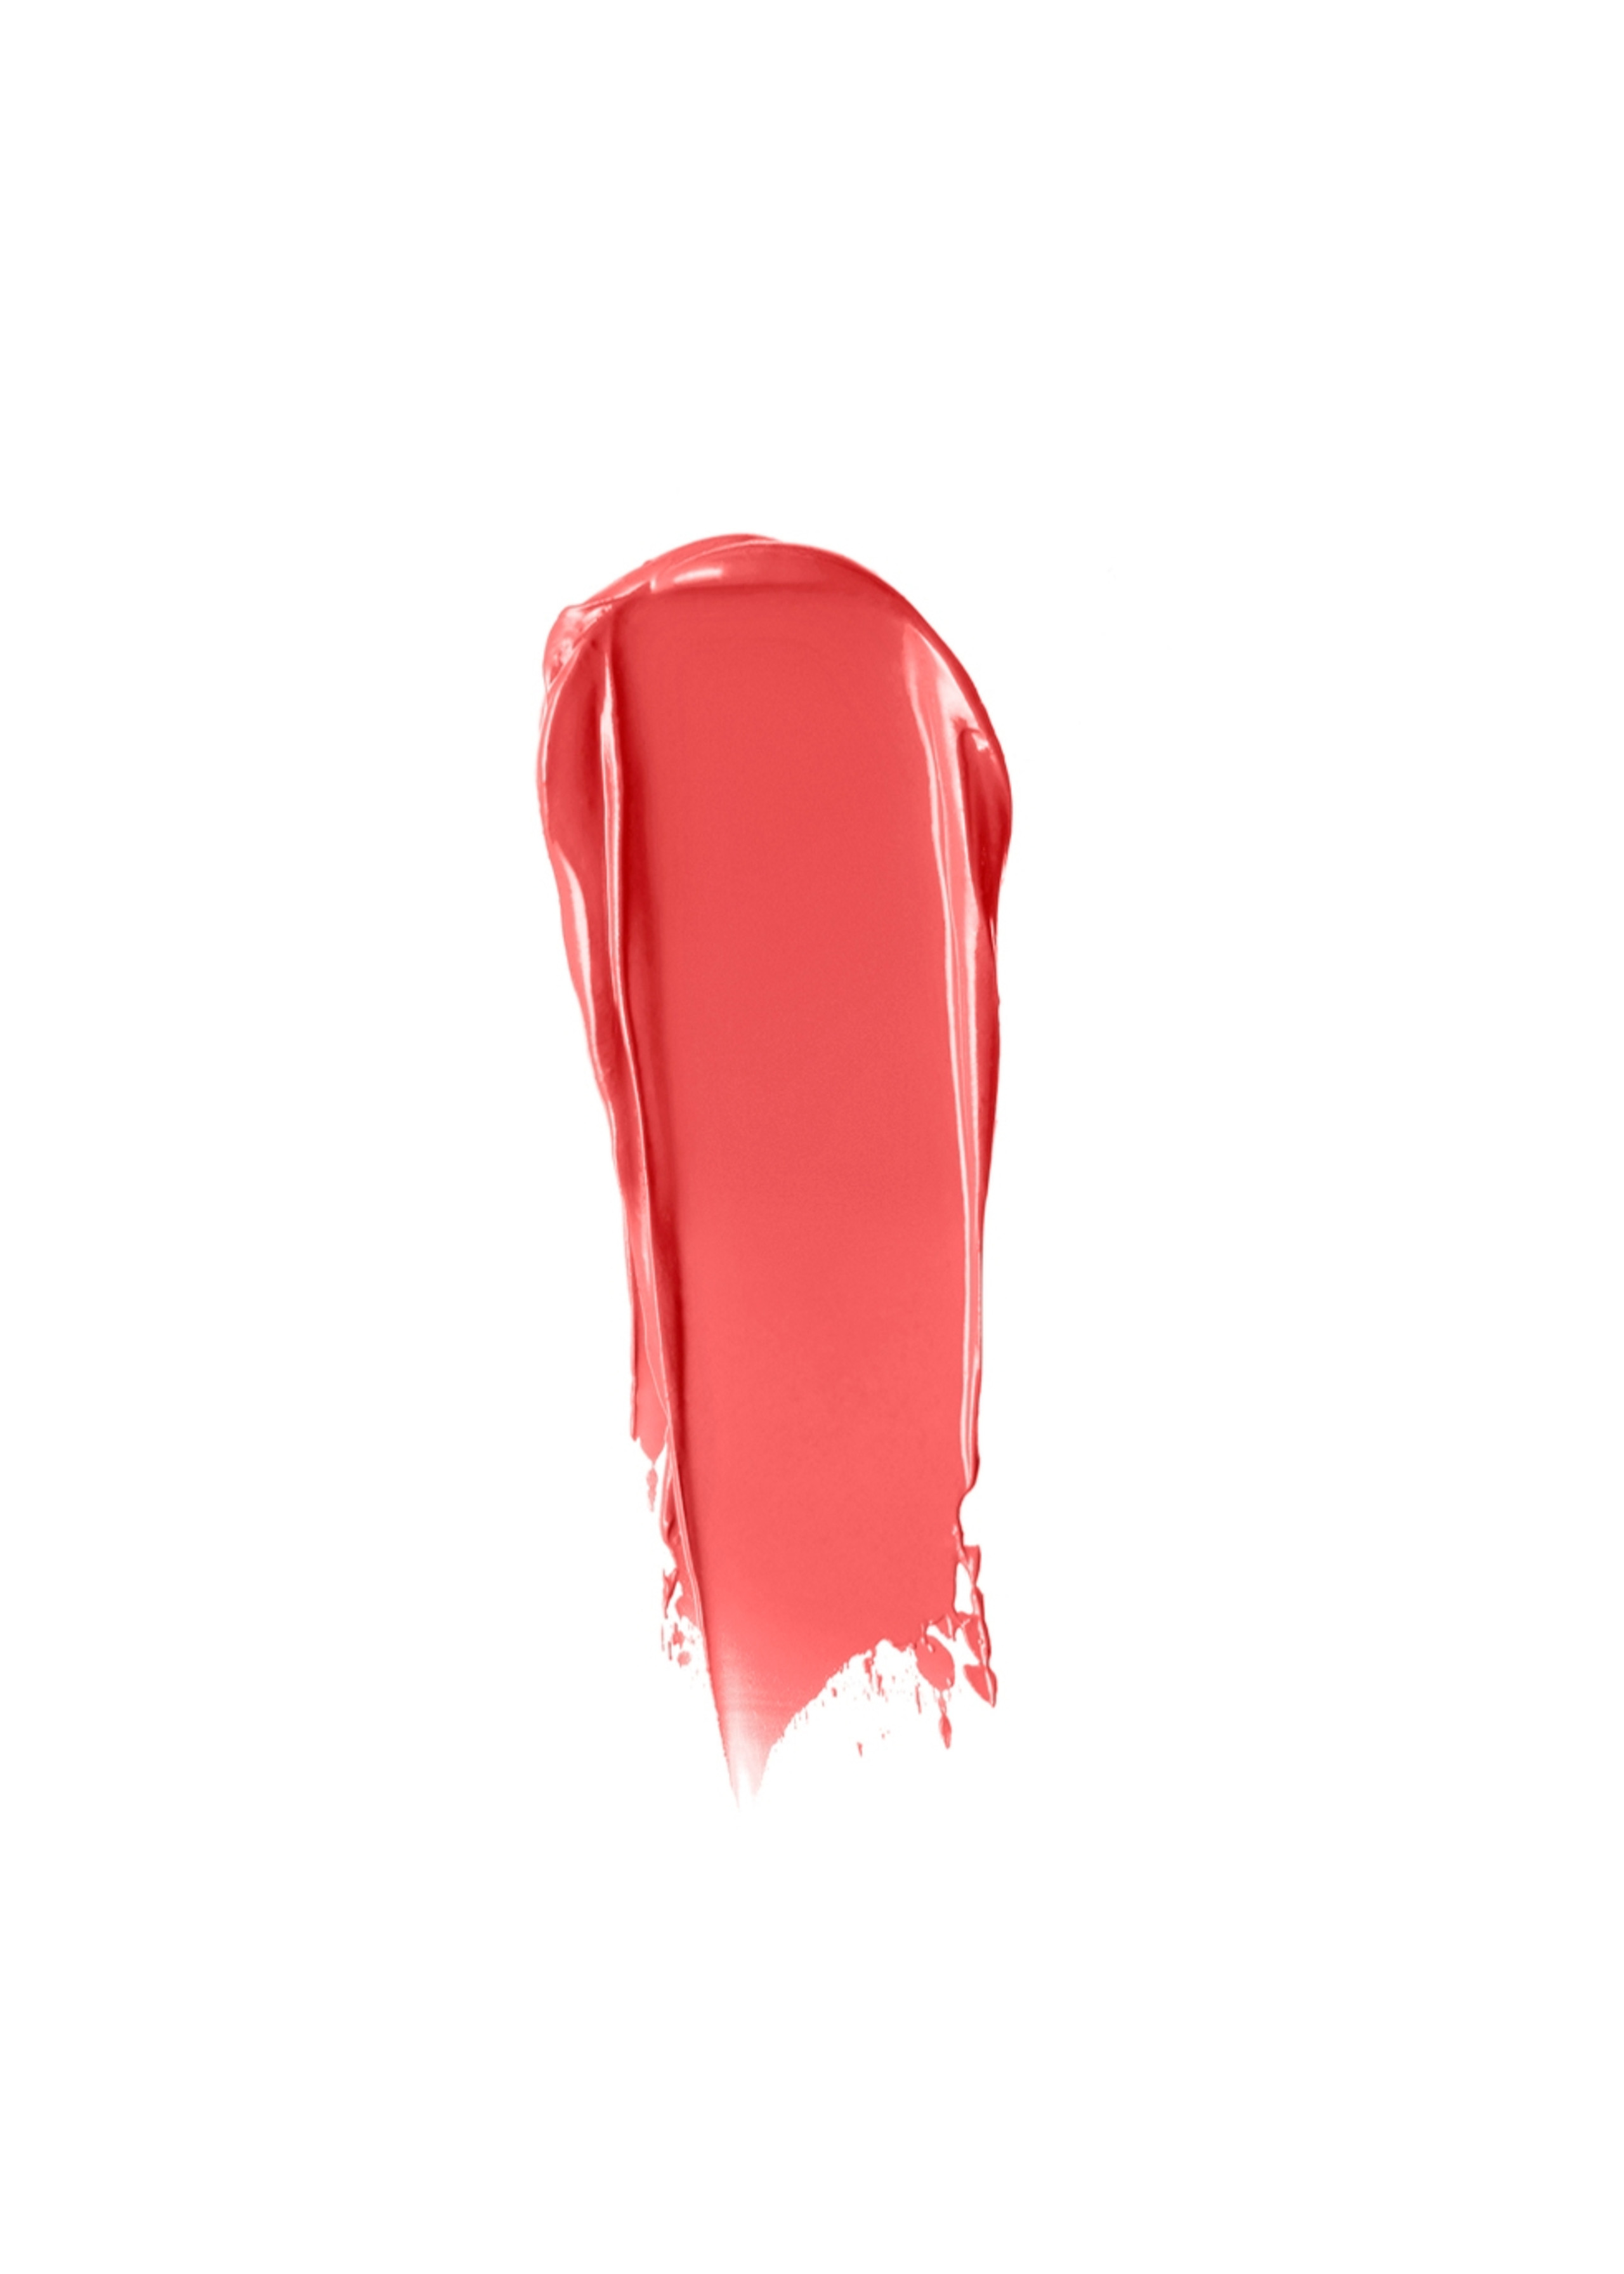 NARS Audacious Lipstick | Harvey Nichols